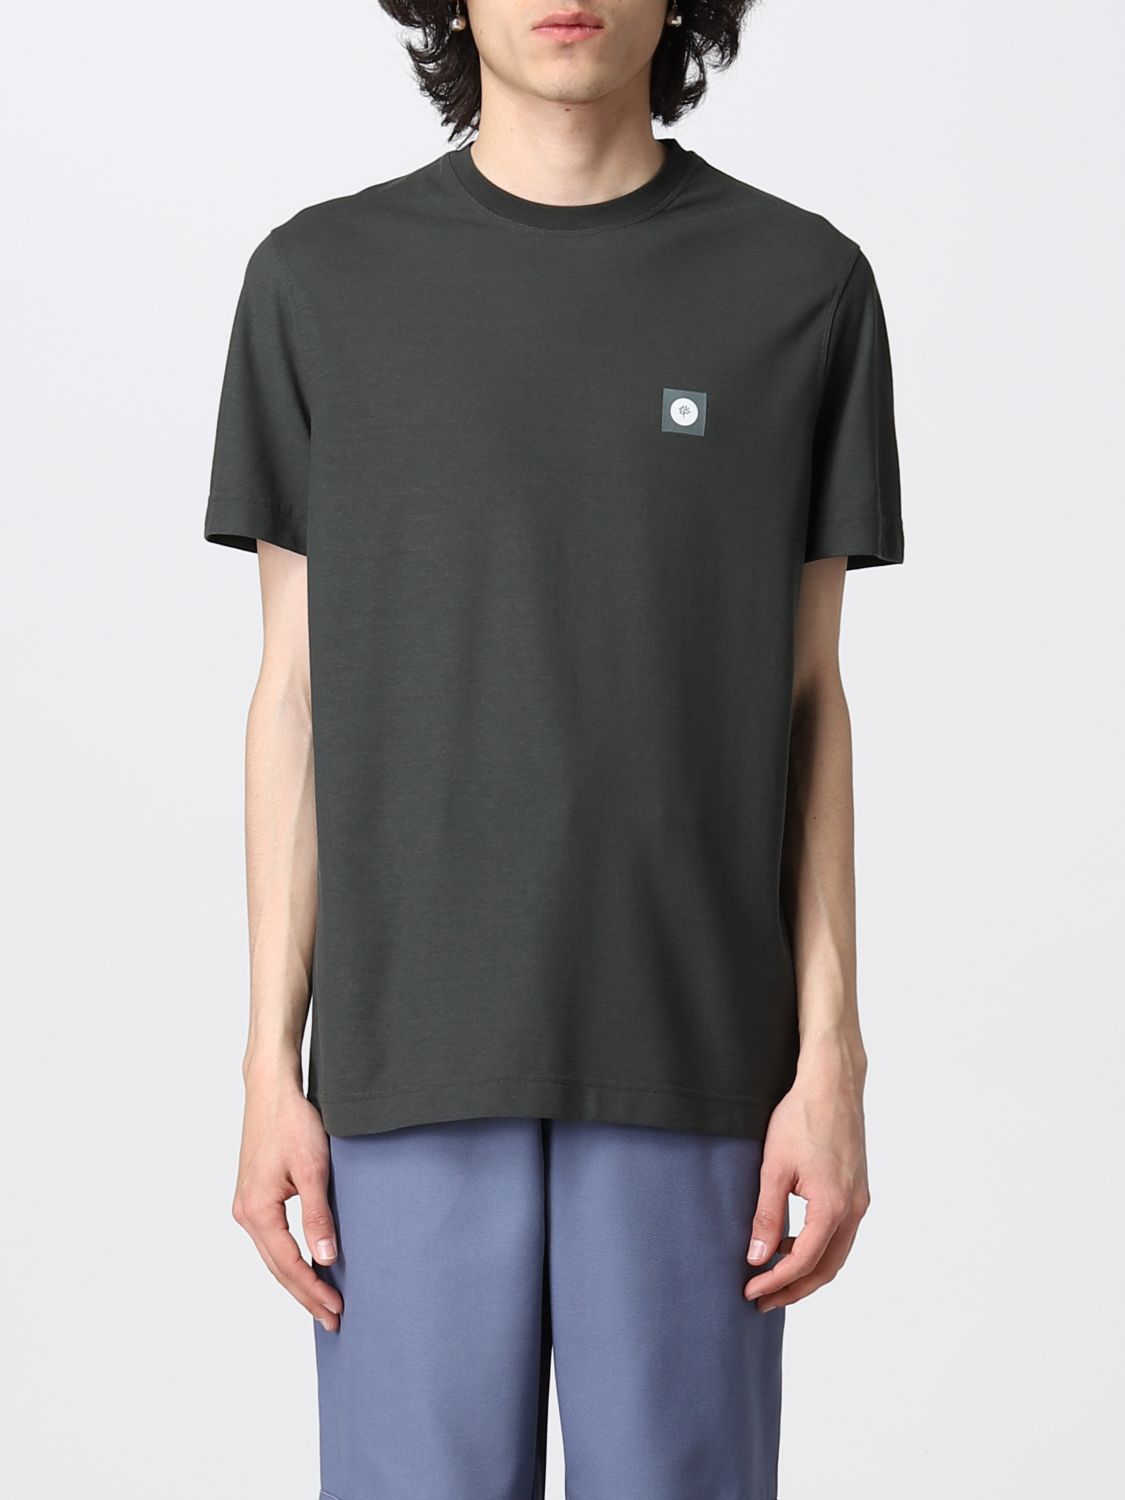 ZANONE: t-shirt for man - Green | Zanone t-shirt 812597Z0381 online at ...